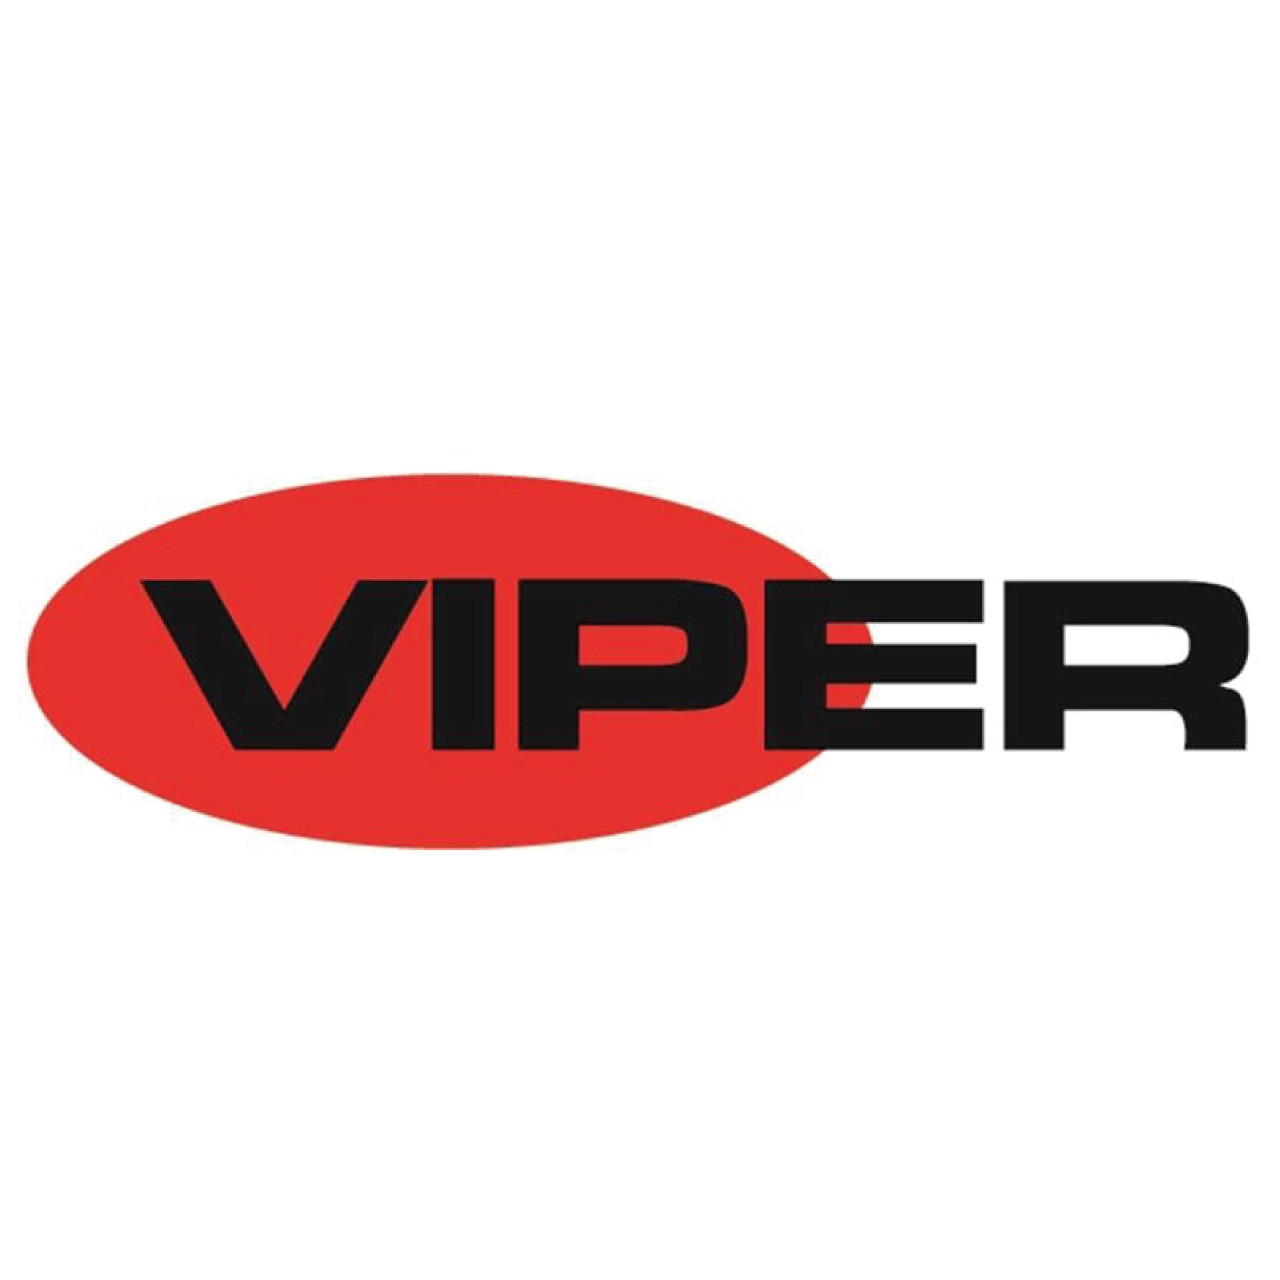 VIPER EQUIPMENT PART # 56511403 POWER UNIT-GAS-WG972-T4 PICTURE